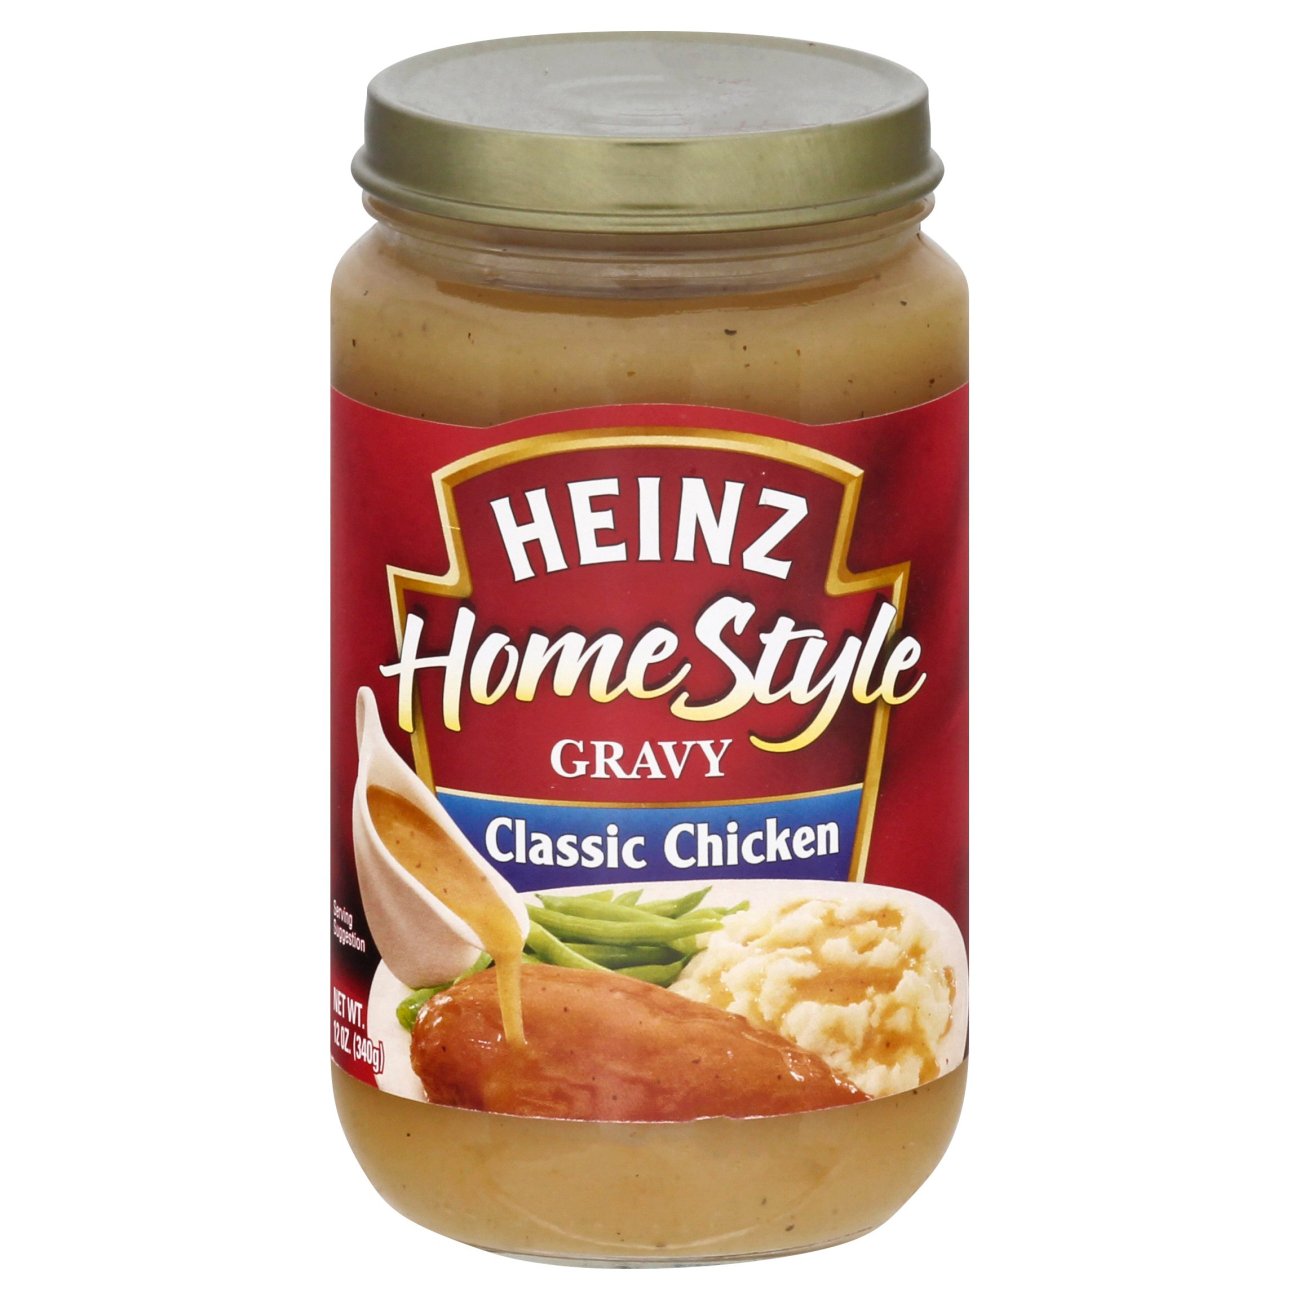 Heinz Home Style Classic Chicken Gravy - Shop Sauces & Marinades at H-E-B